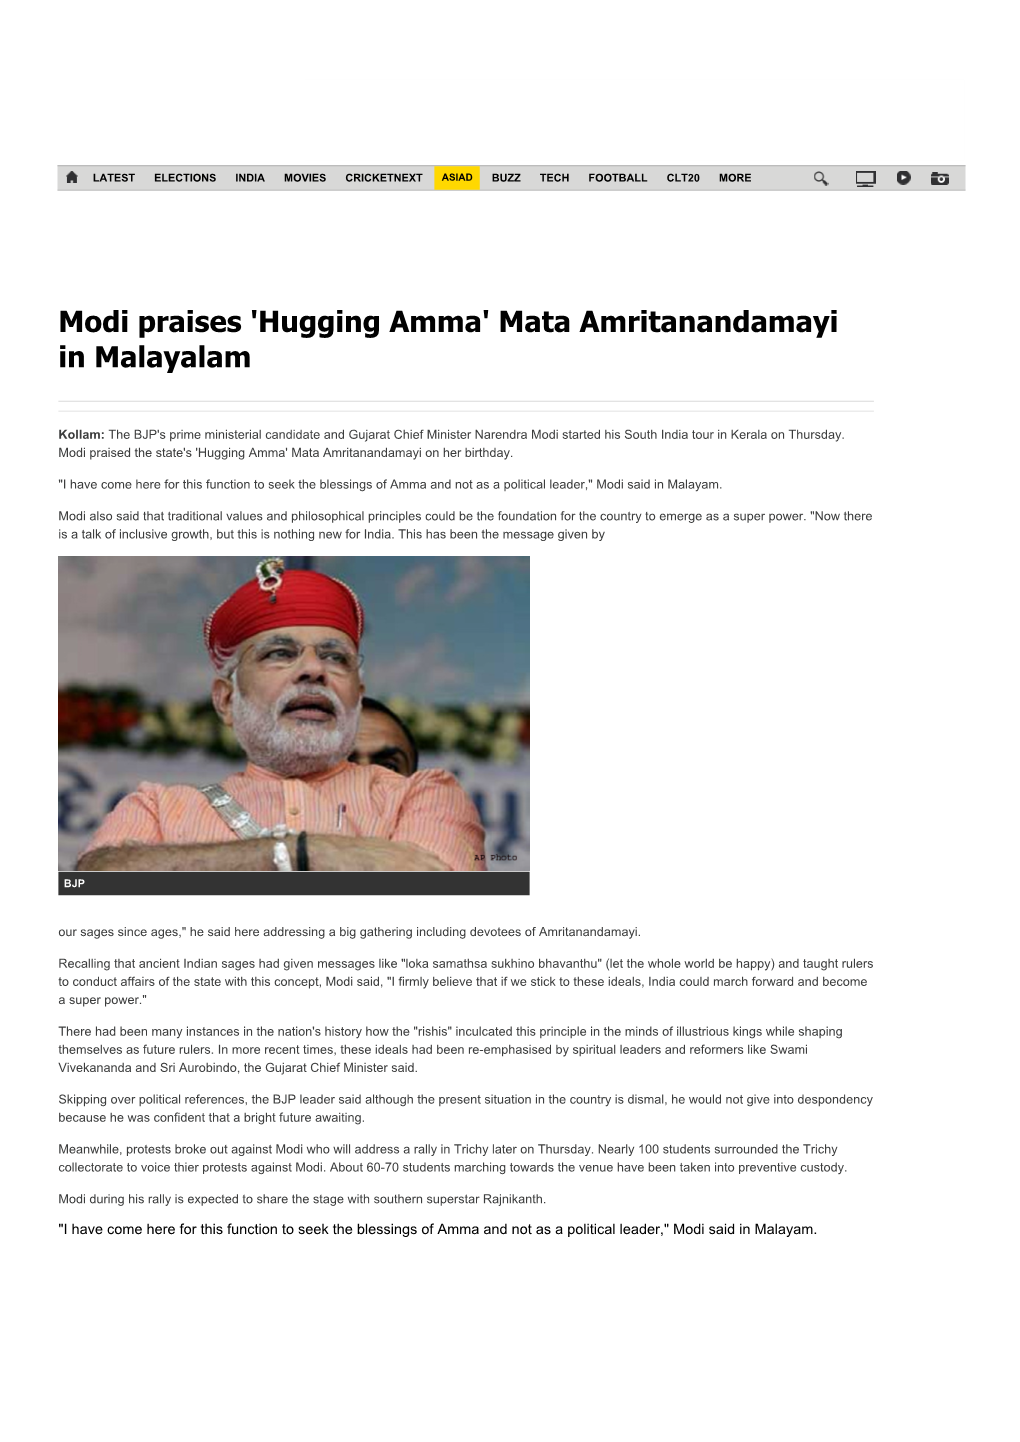 Modi Praises 'Hugging Amma' Mata Amritanandamayi in Malayalam - Ibnlive